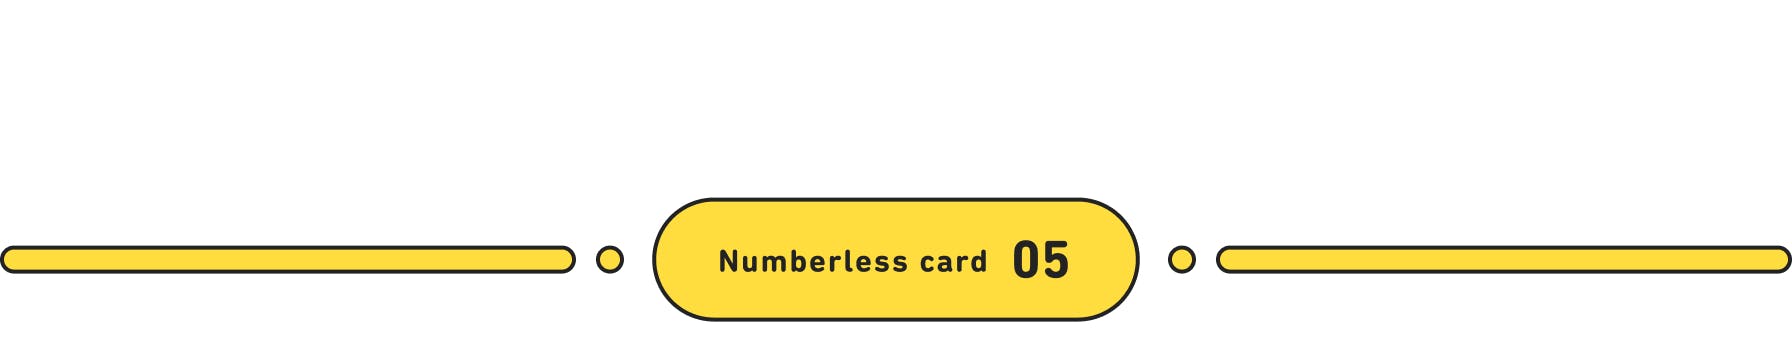 Numberless card 05